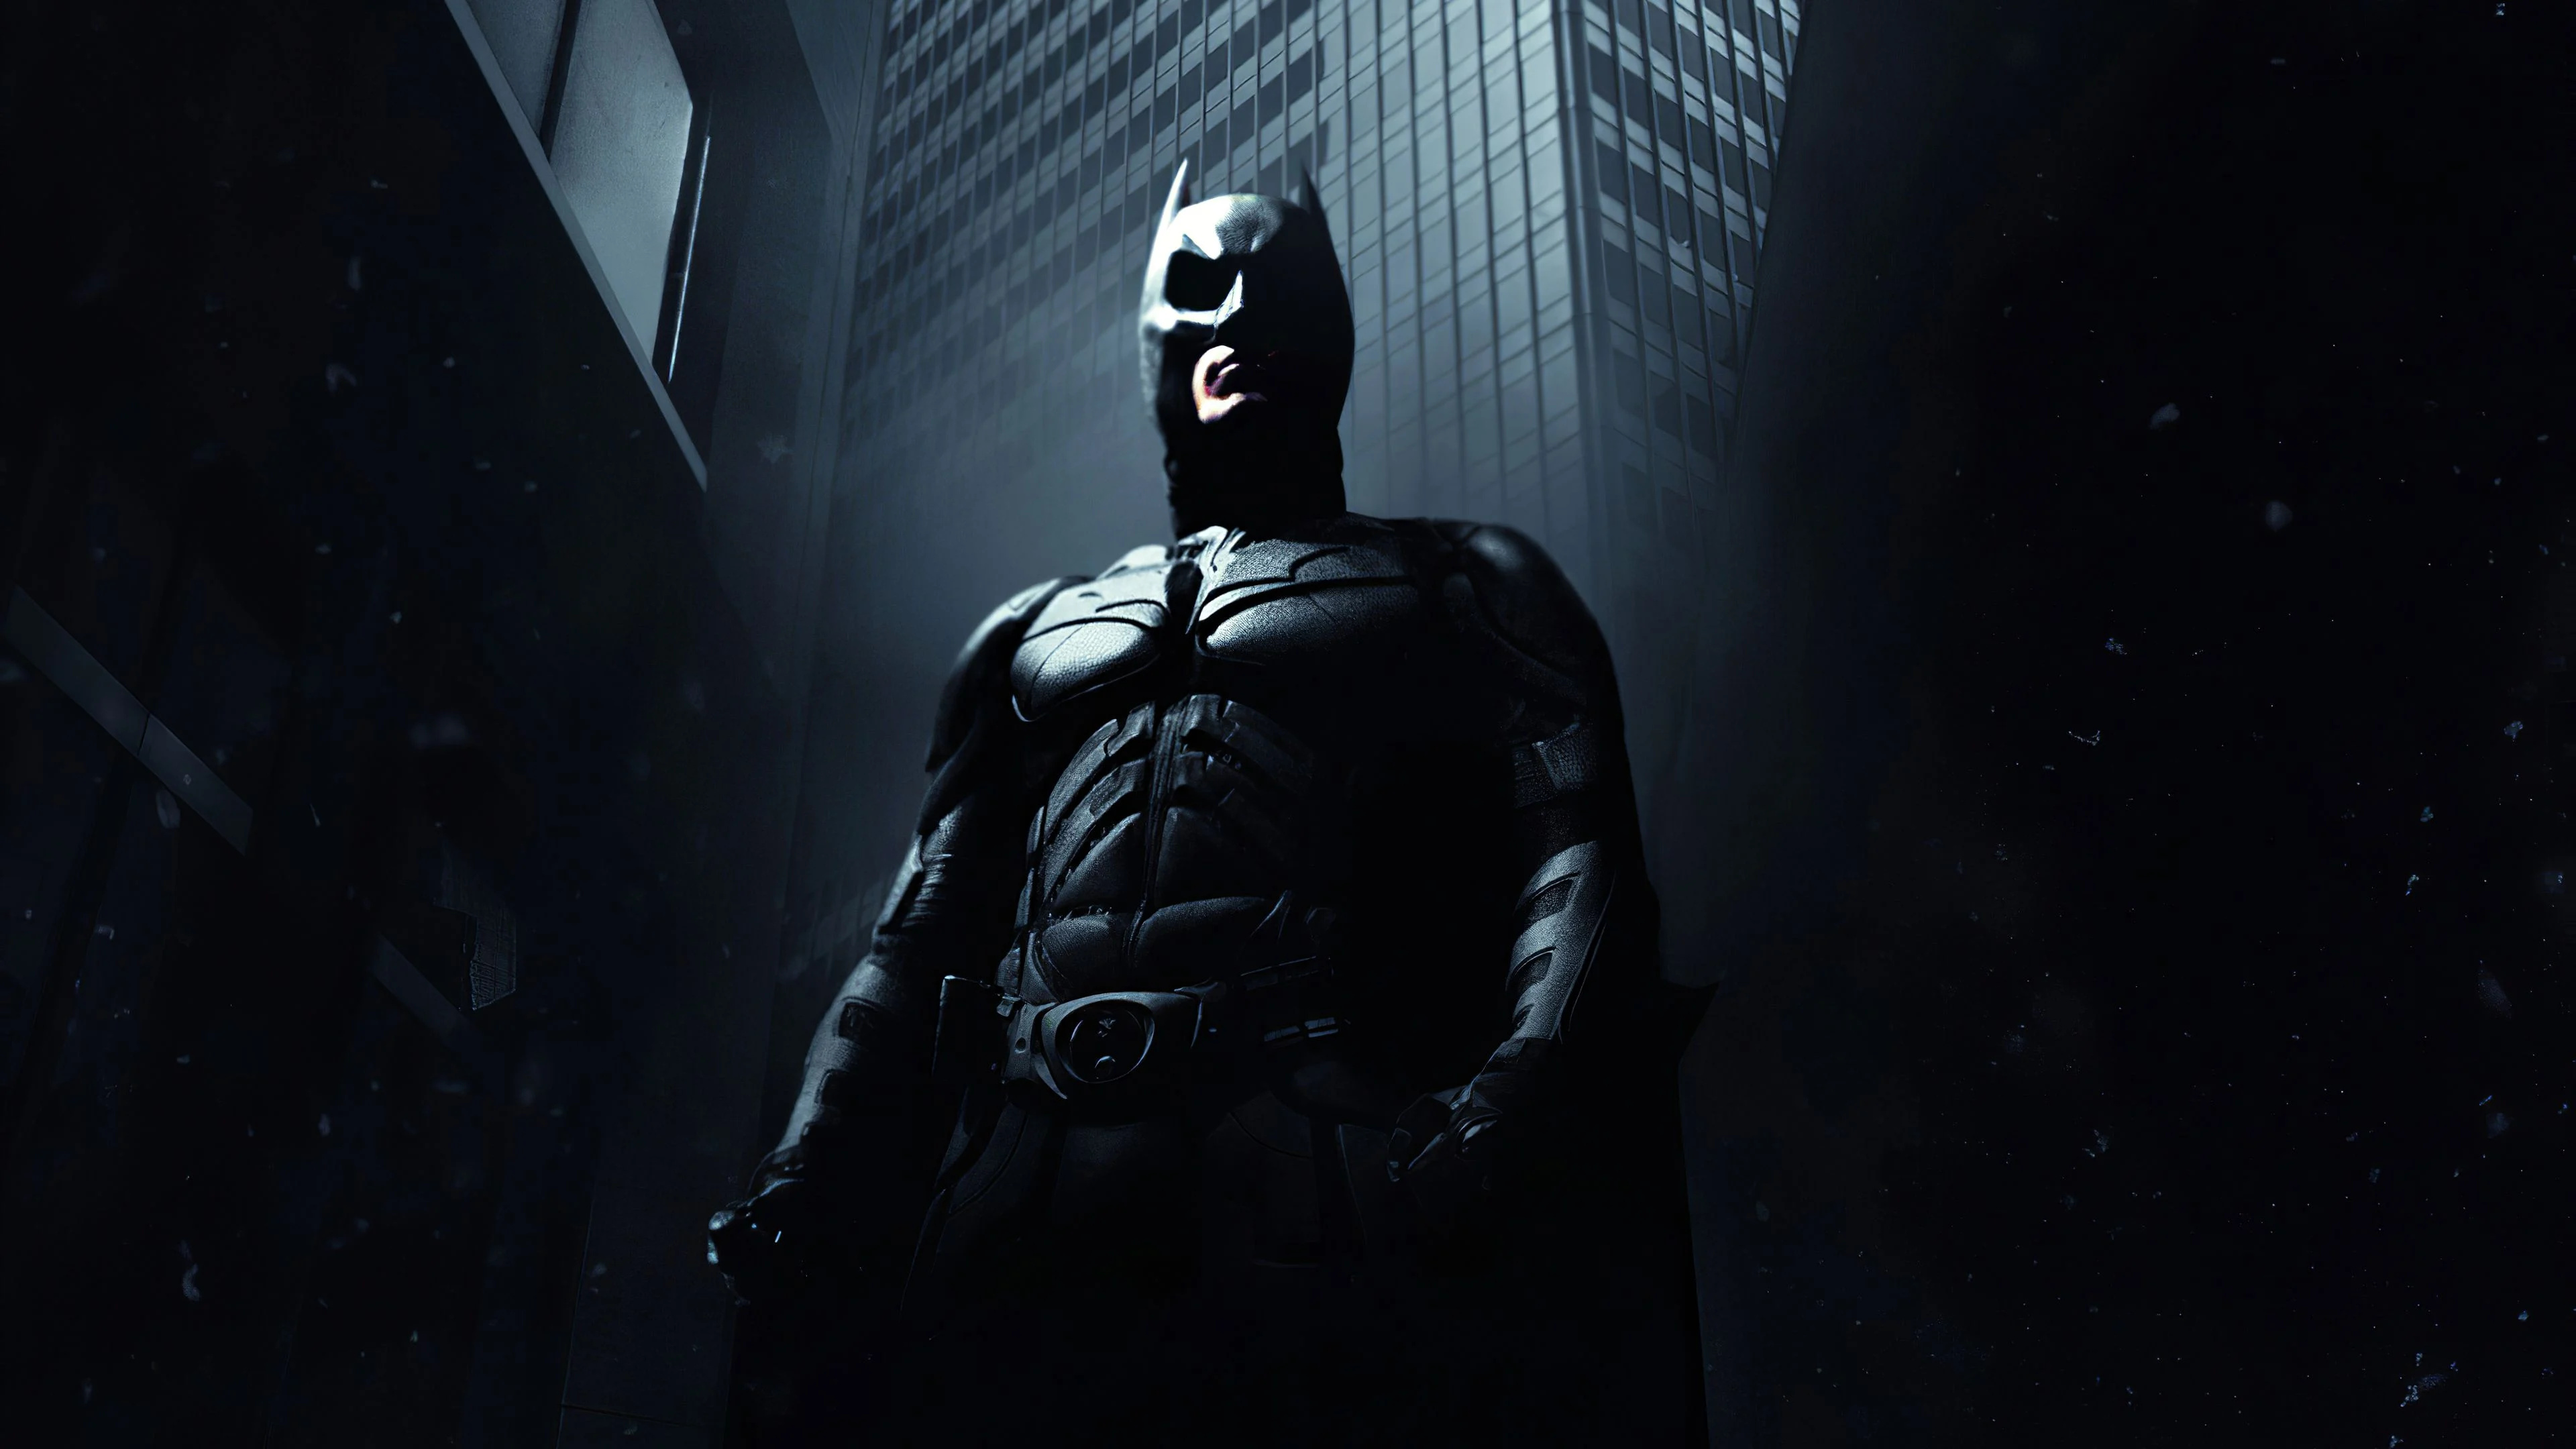 Christian Bale, Iconic Batman, Striking wallpapers, Dynamic backgrounds, 3840x2160 4K Desktop